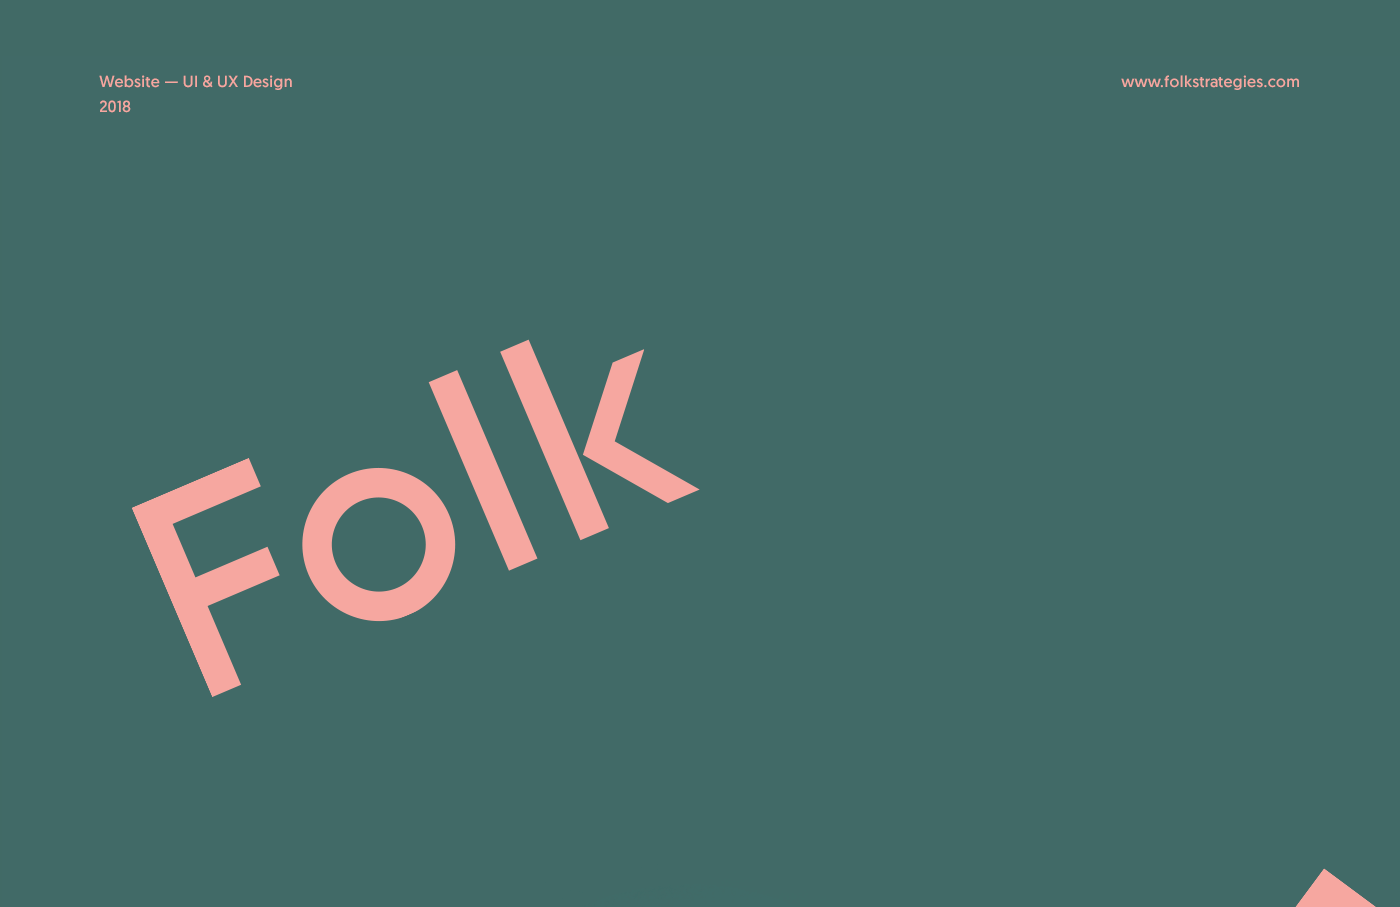 Homepages design idea #351: Folk Strategies - Website